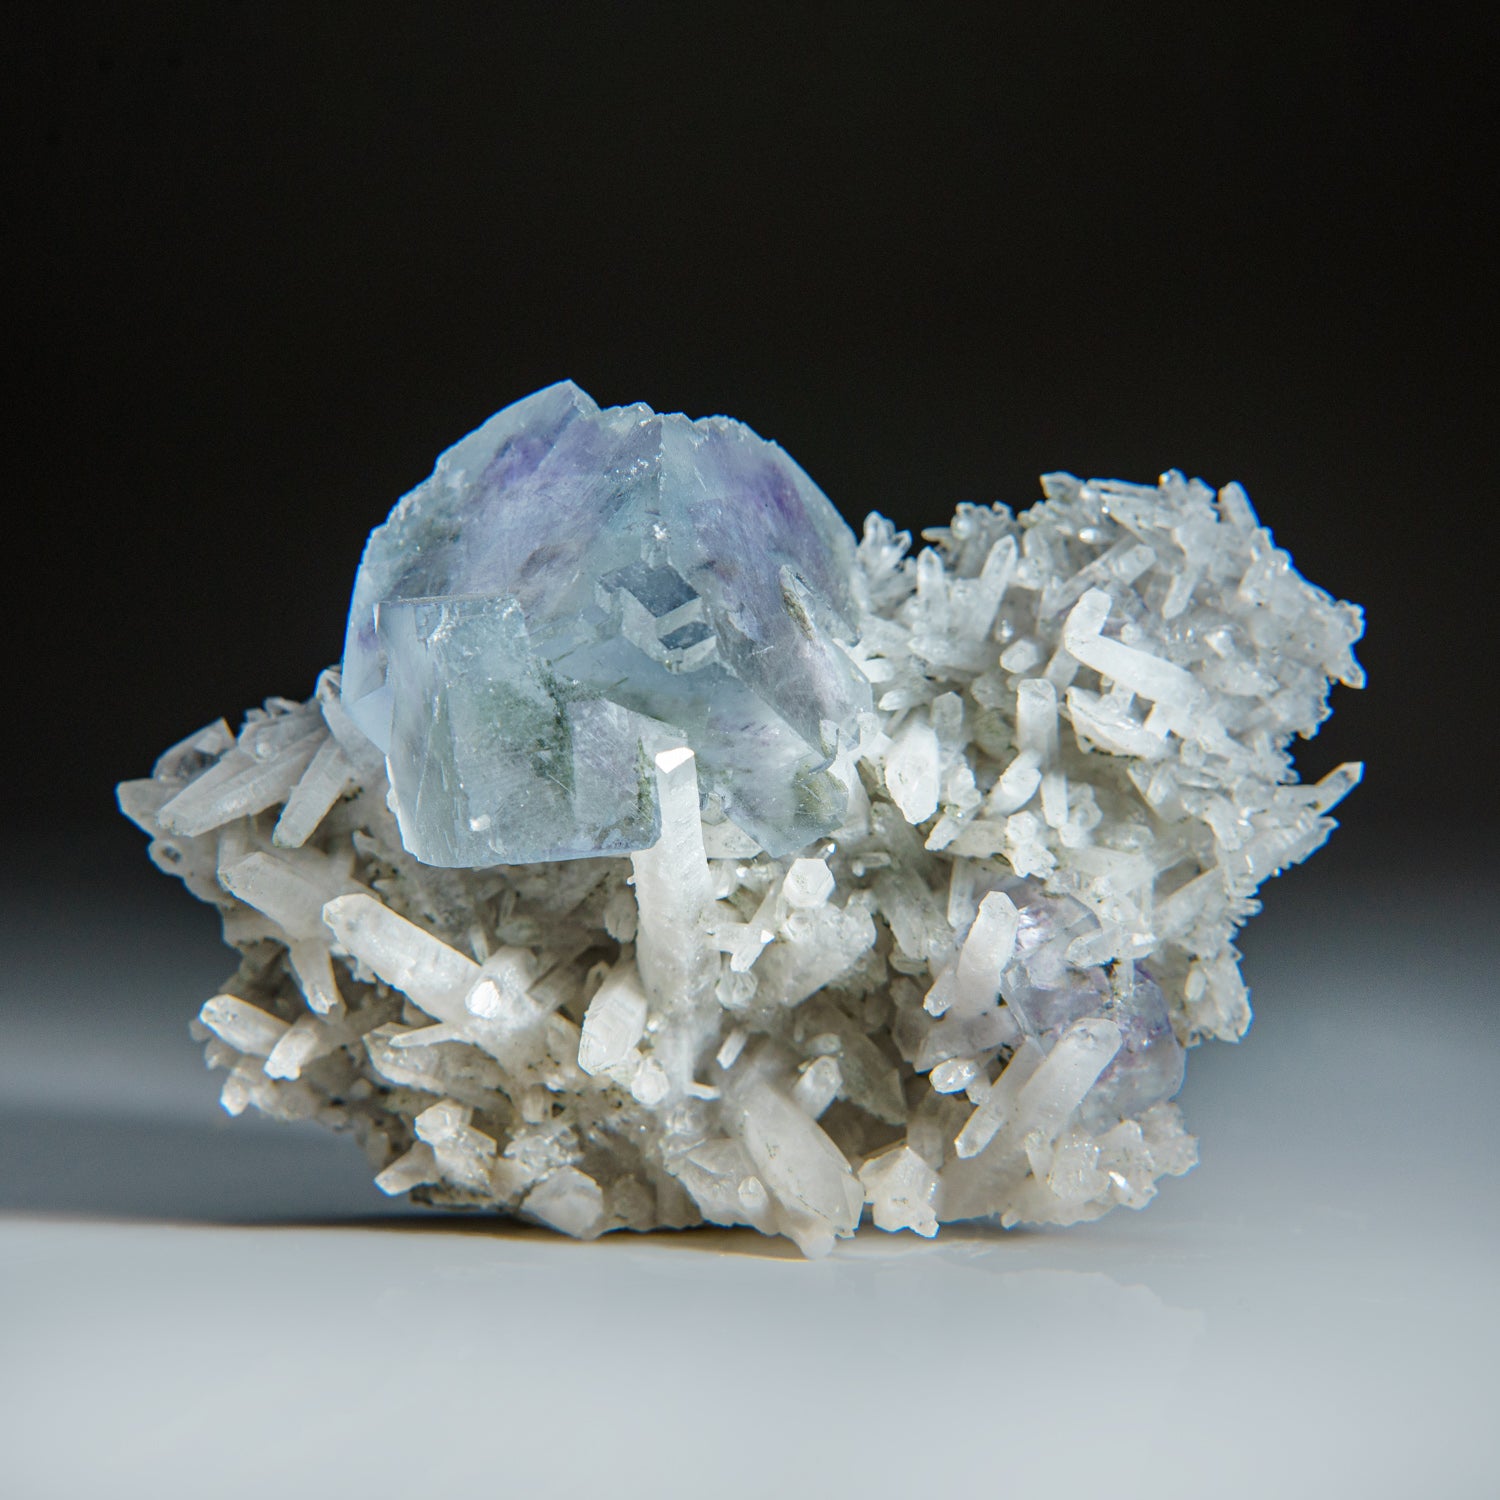 Purple and Blue Fluorite on Quartz from De'an Mine, Wushan, Jiangxi Province, China